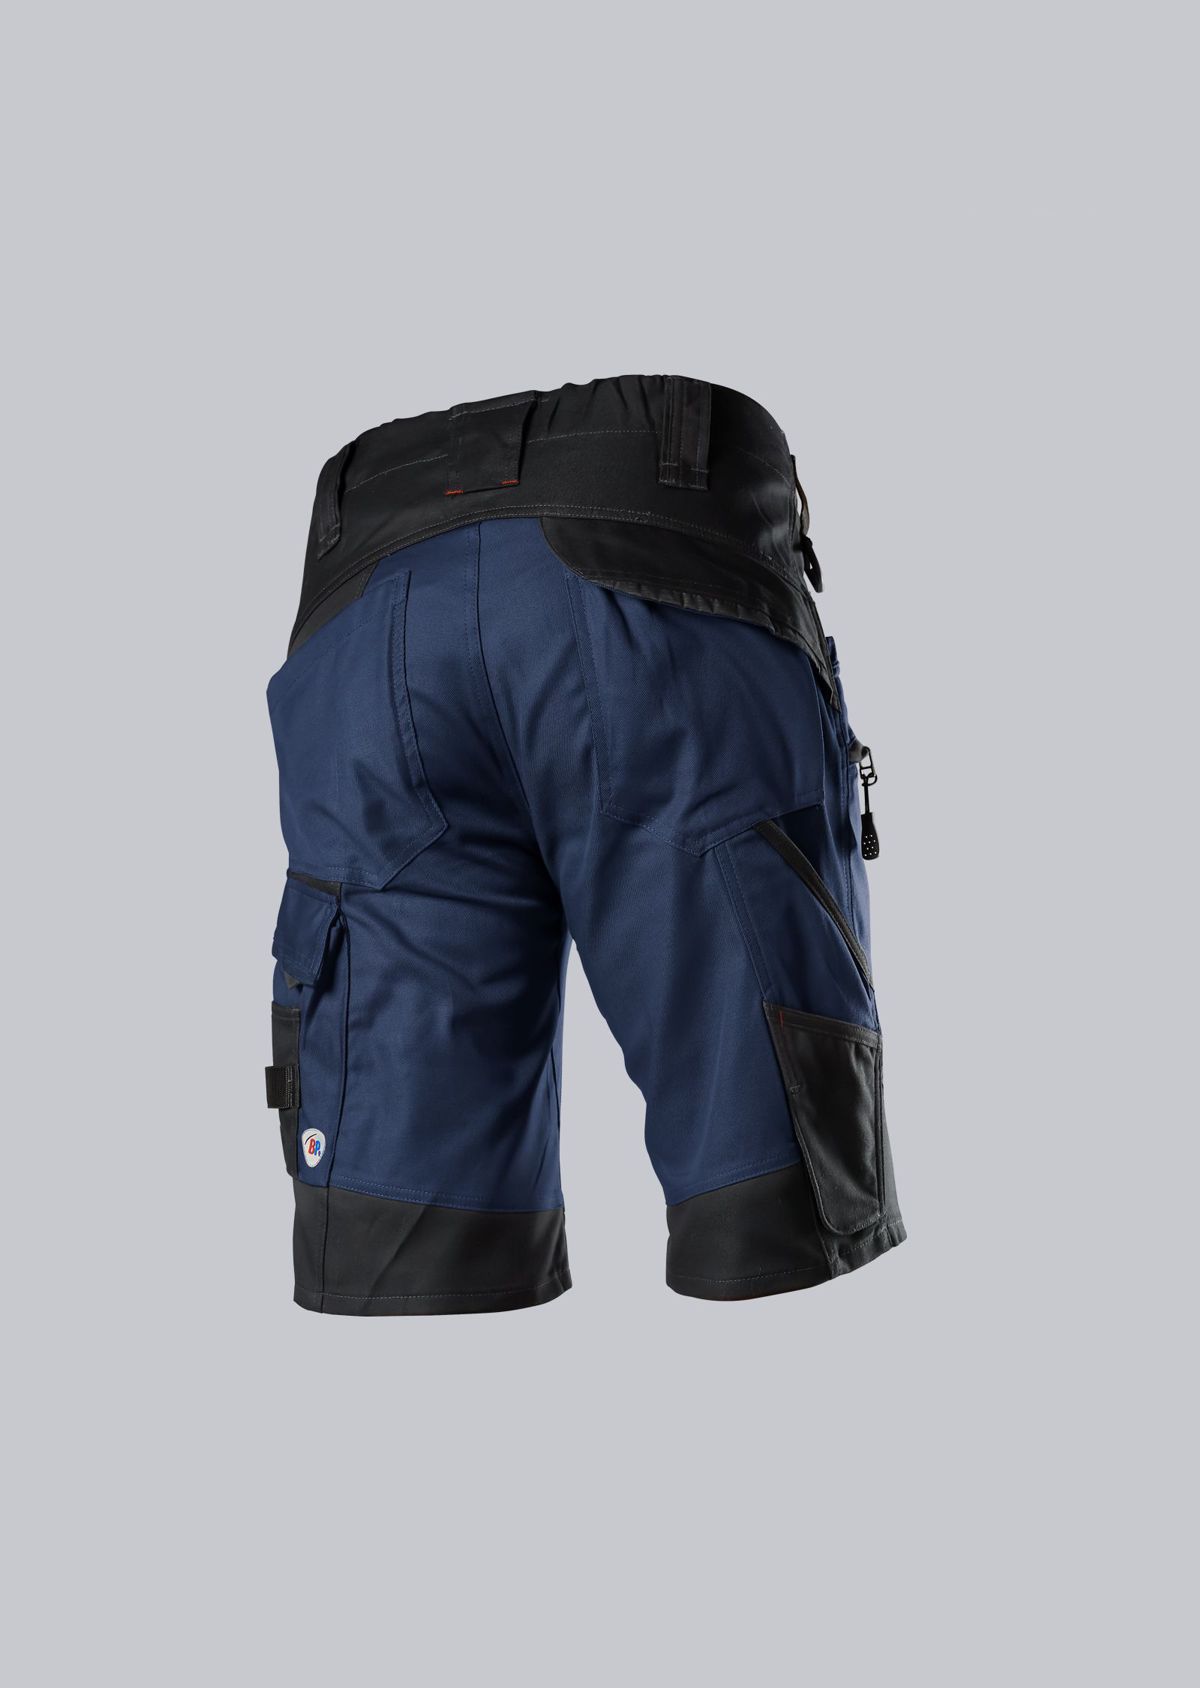 BP® Lightweight stretch shorts